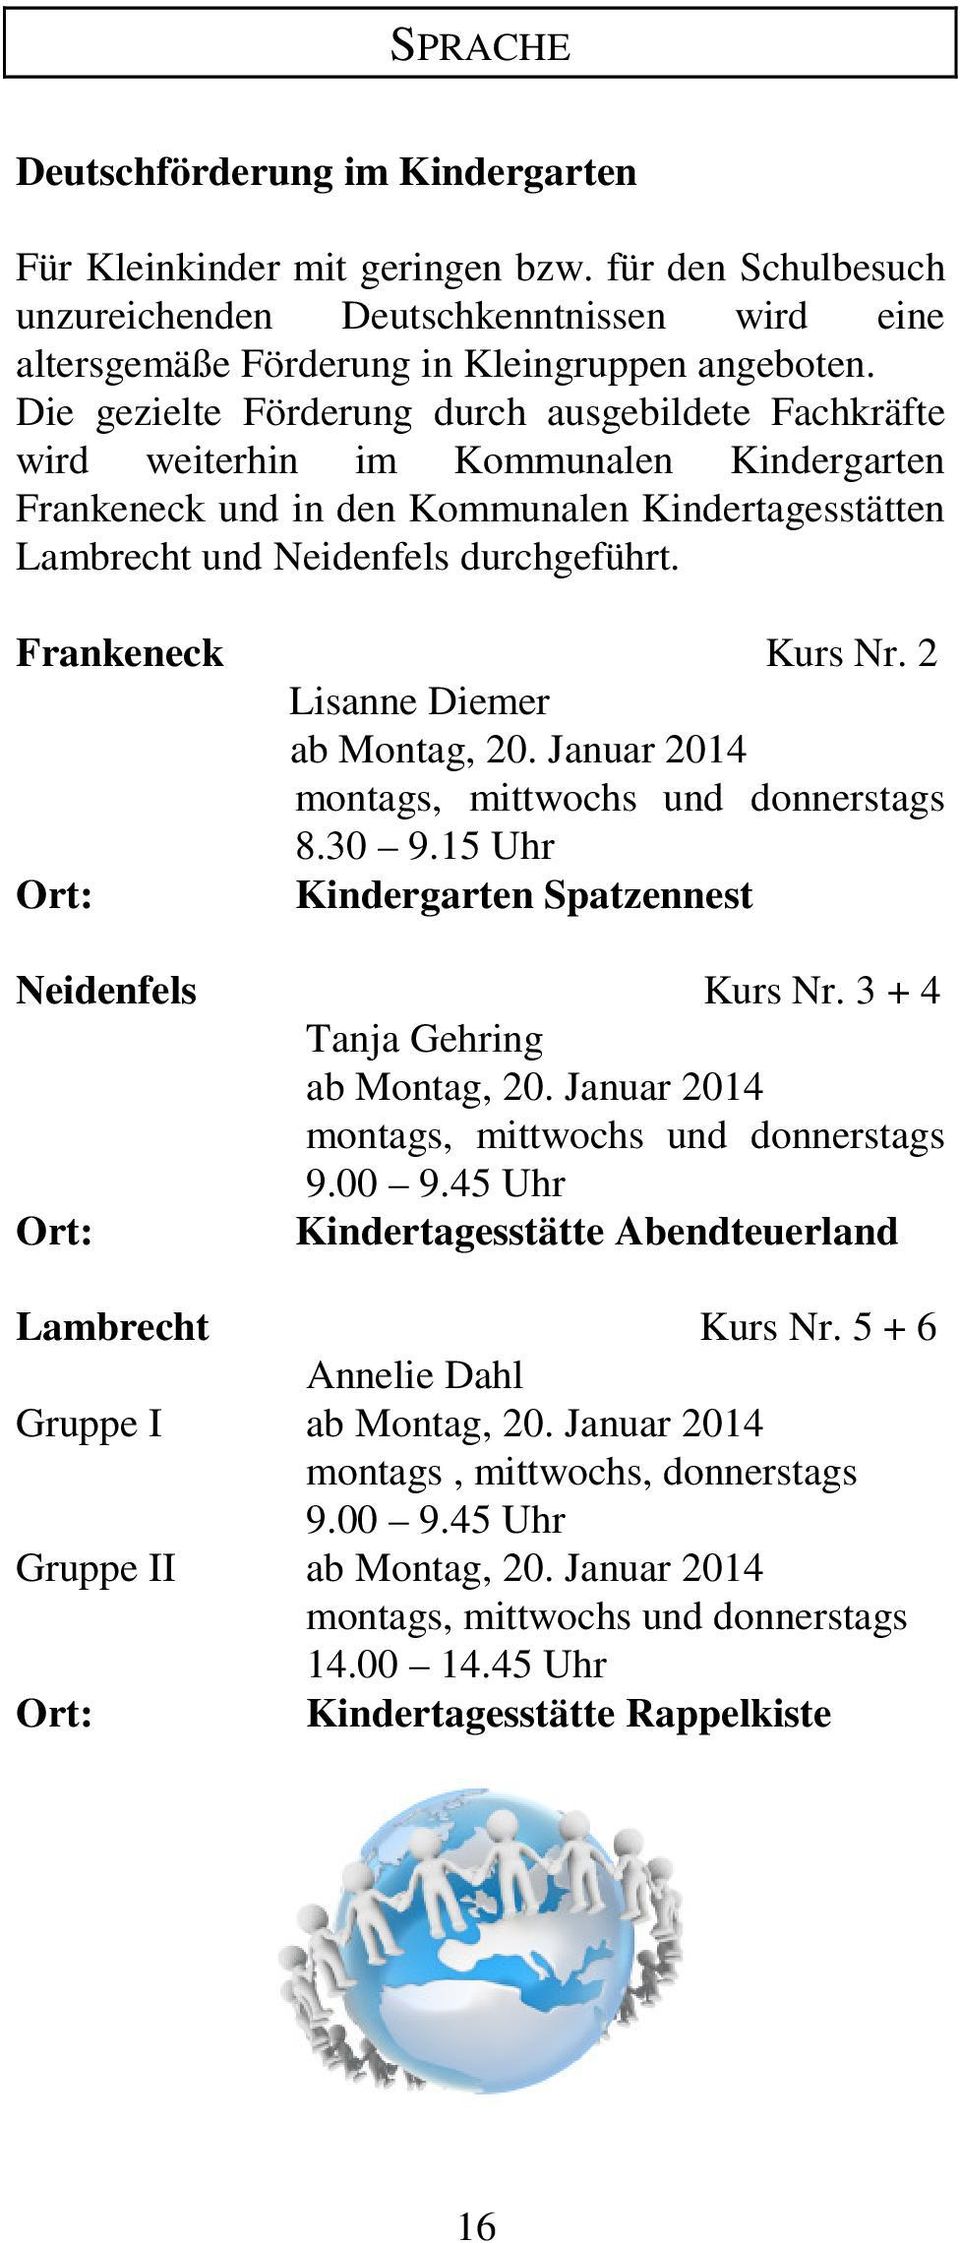 Frankeneck Kurs Nr. 2 Lisanne Diemer ab Montag, 20. Januar 2014 montags, mittwochs und donnerstags 8.30 9.15 Uhr Ort: Kindergarten Spatzennest Neidenfels Kurs Nr. 3 + 4 Tanja Gehring ab Montag, 20.